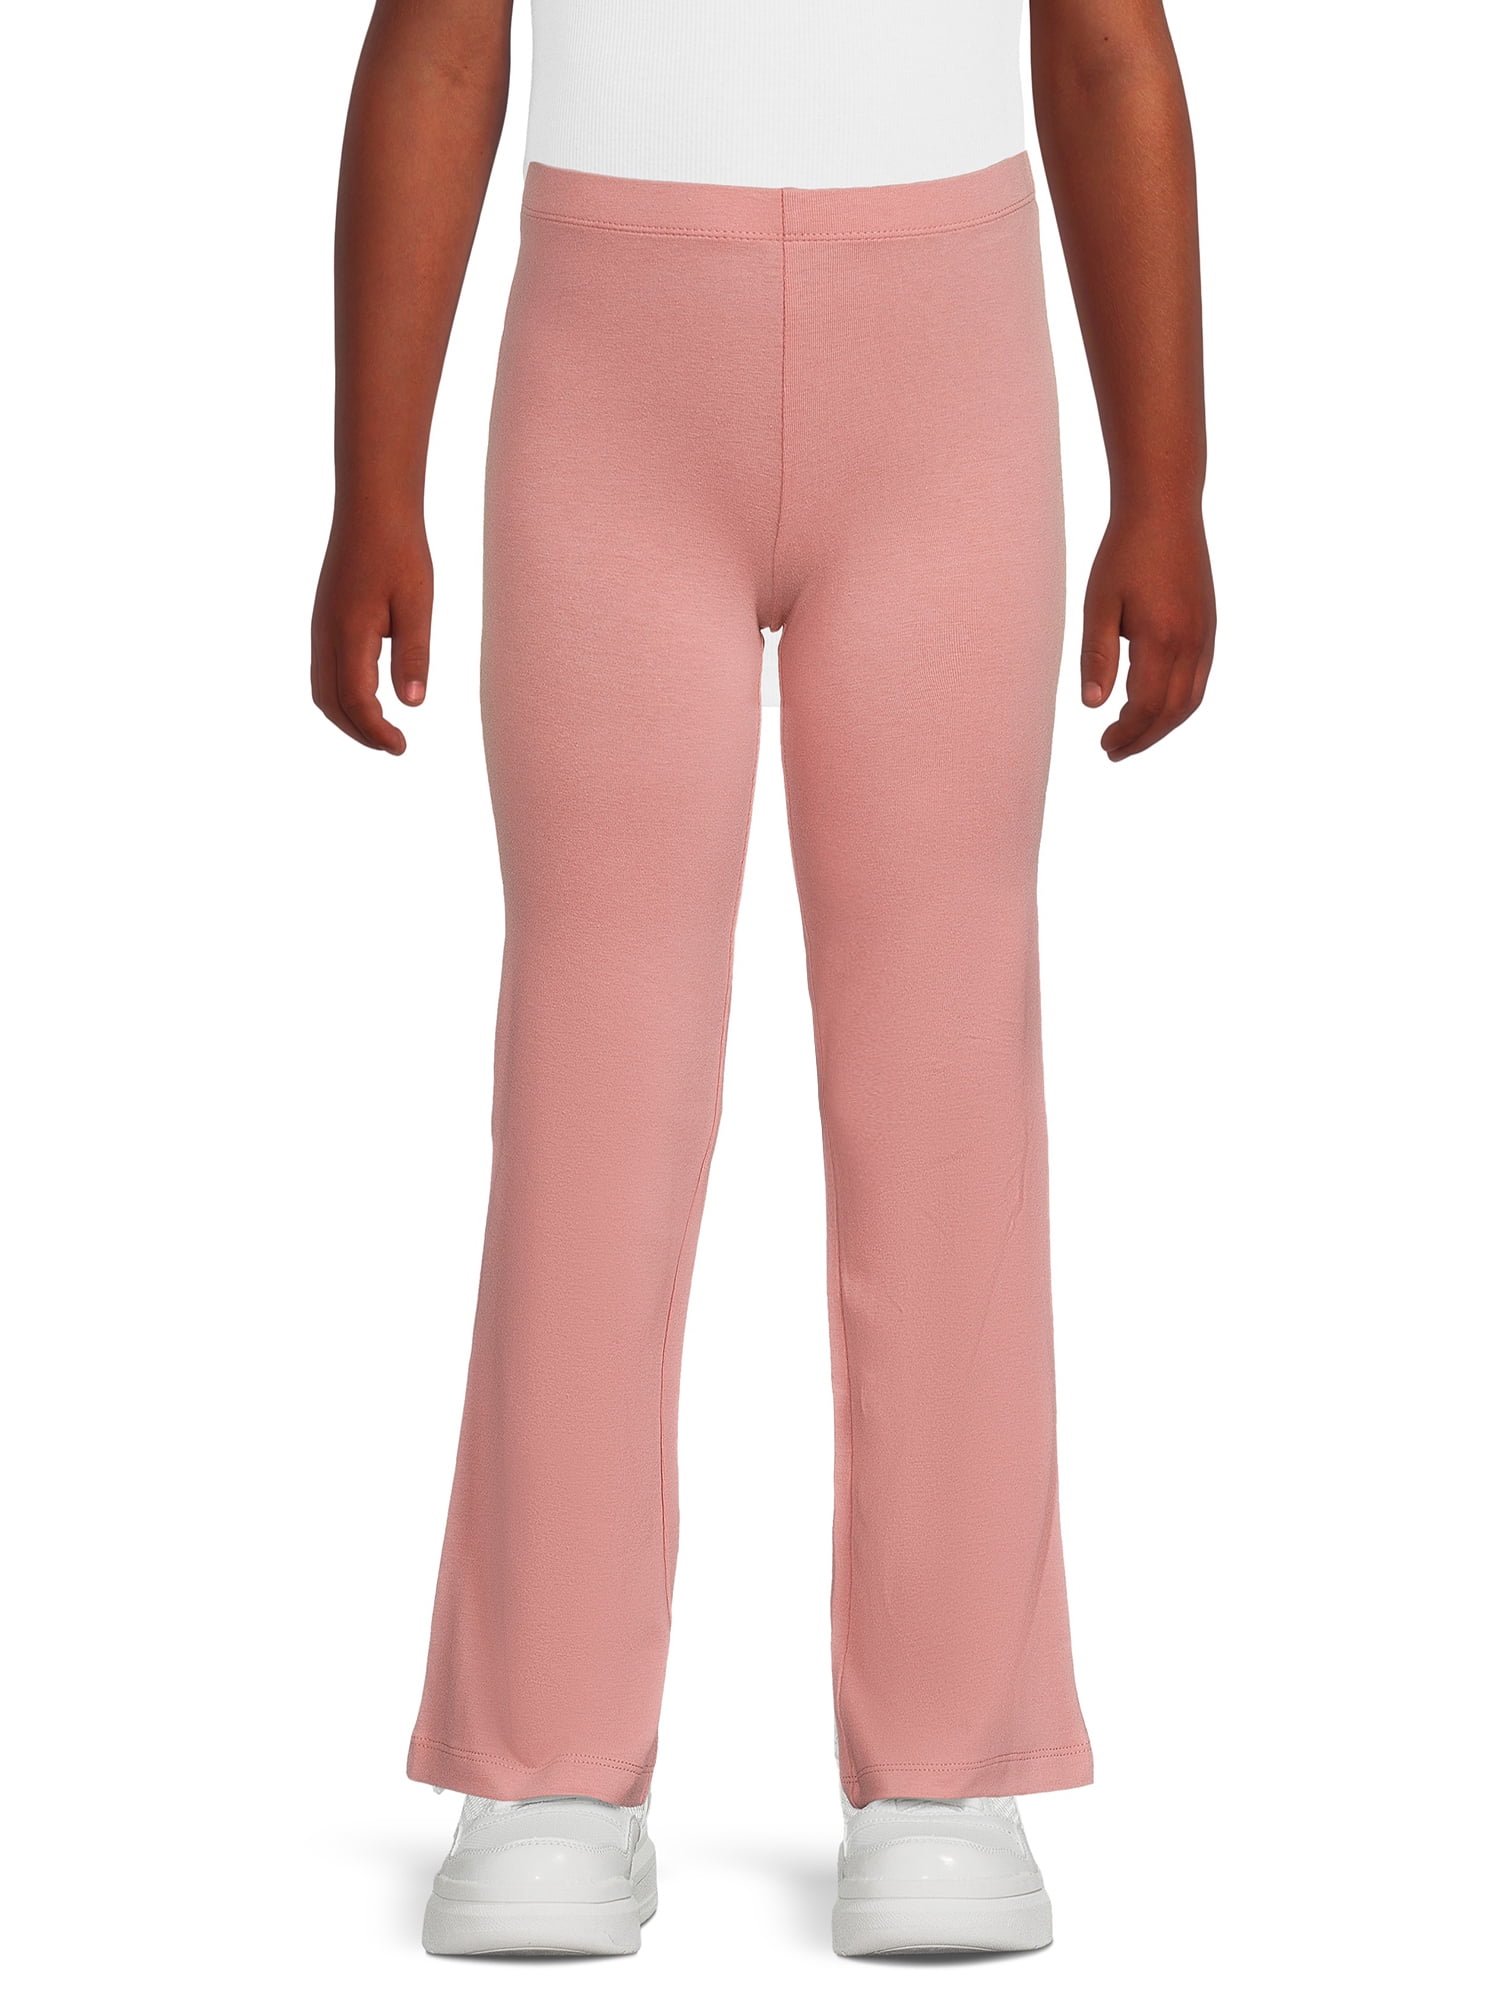 Girls Kids Wonder Nation Gray Pink Butterfly Leggings Pants Size XL 14-16